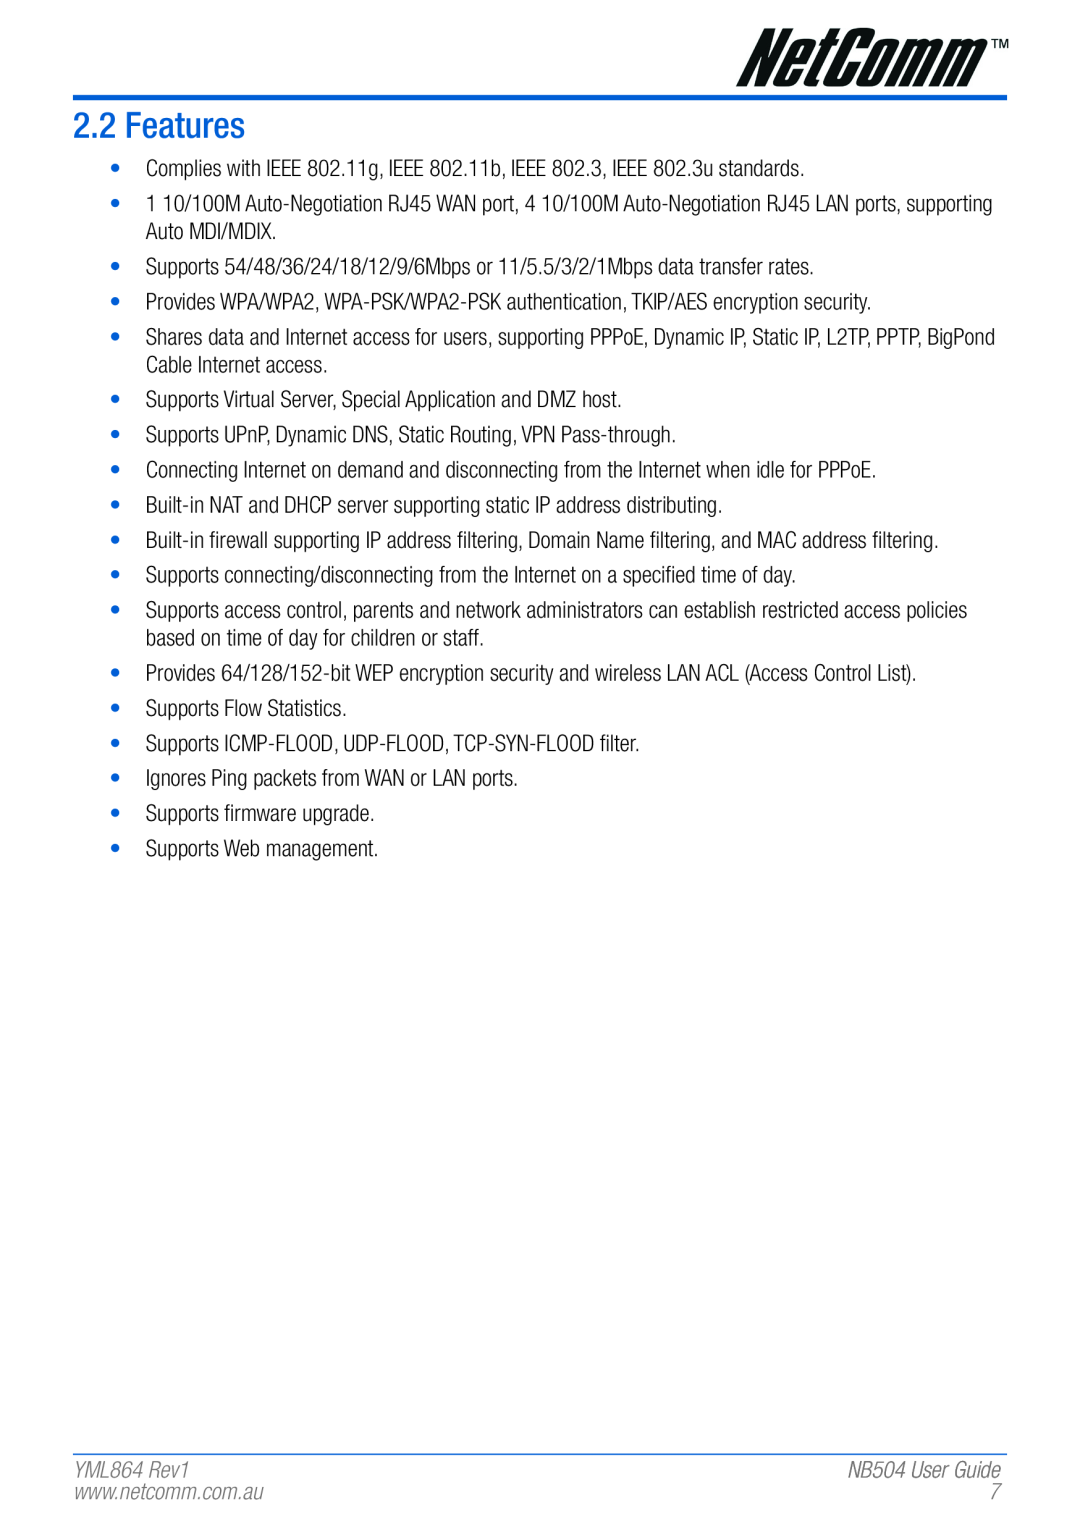 NetComm NB504 manual Features, YML864 Rev1 